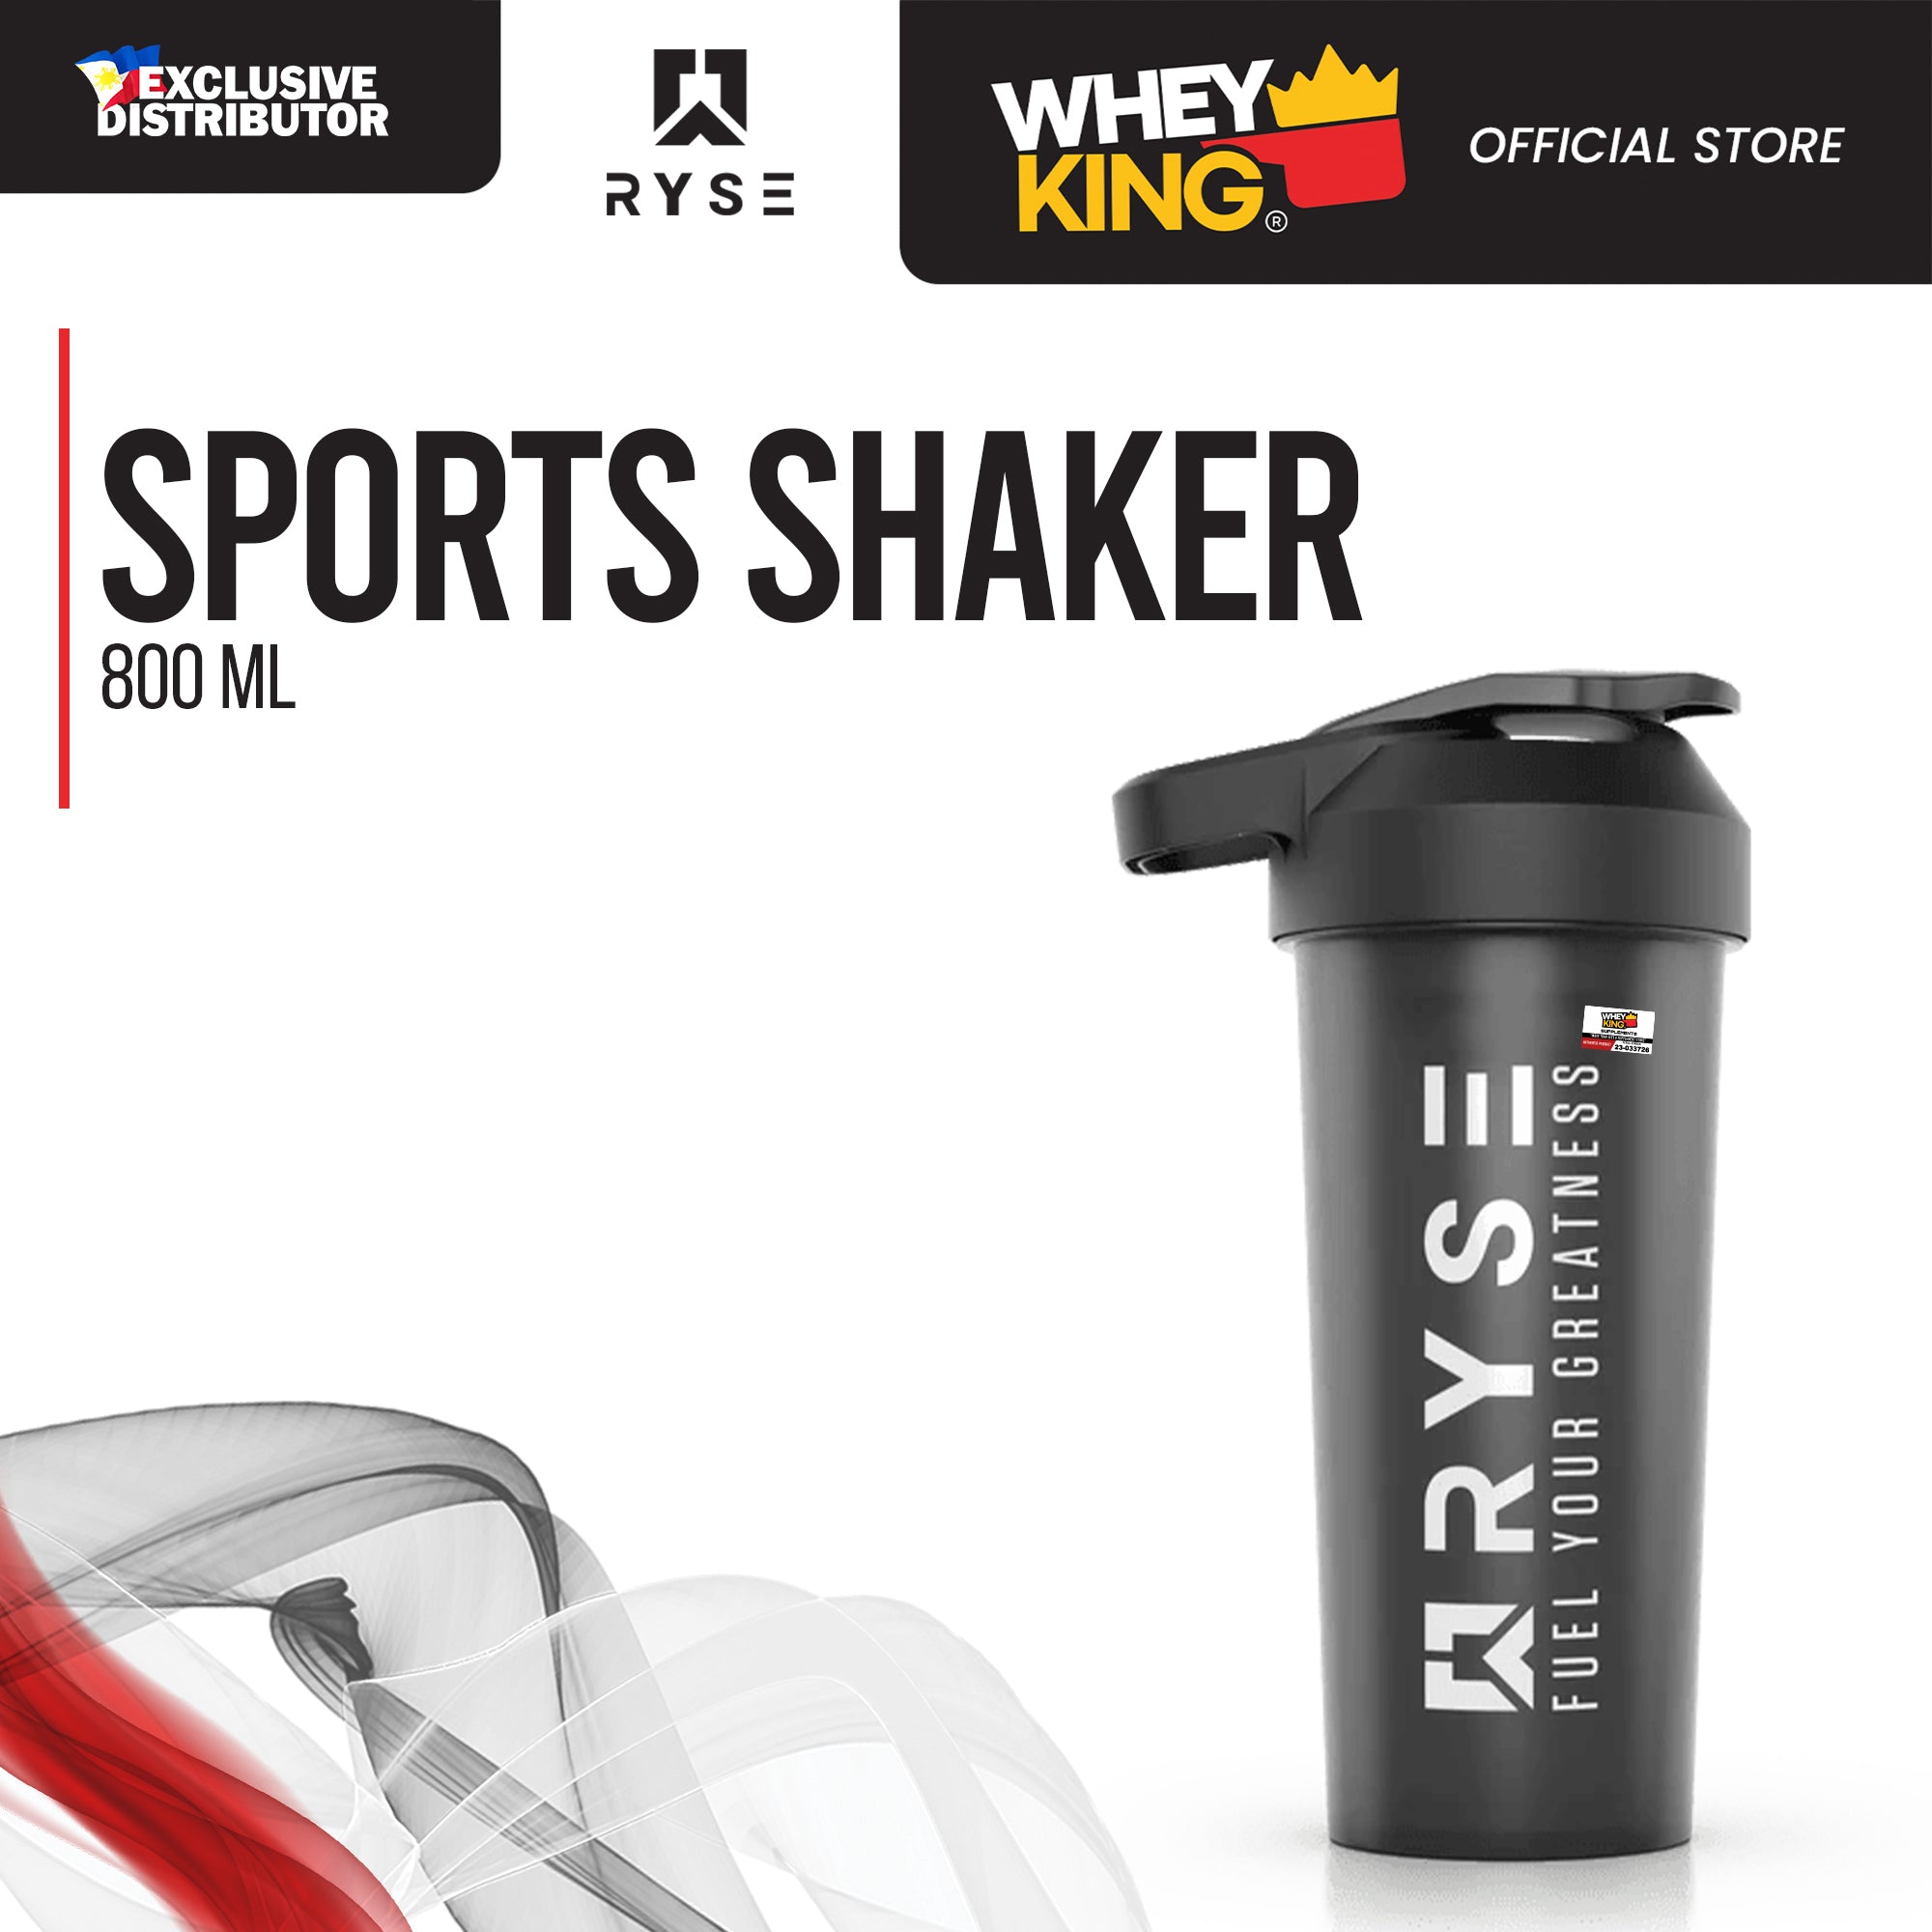 RYSE Sports Shaker 800ml